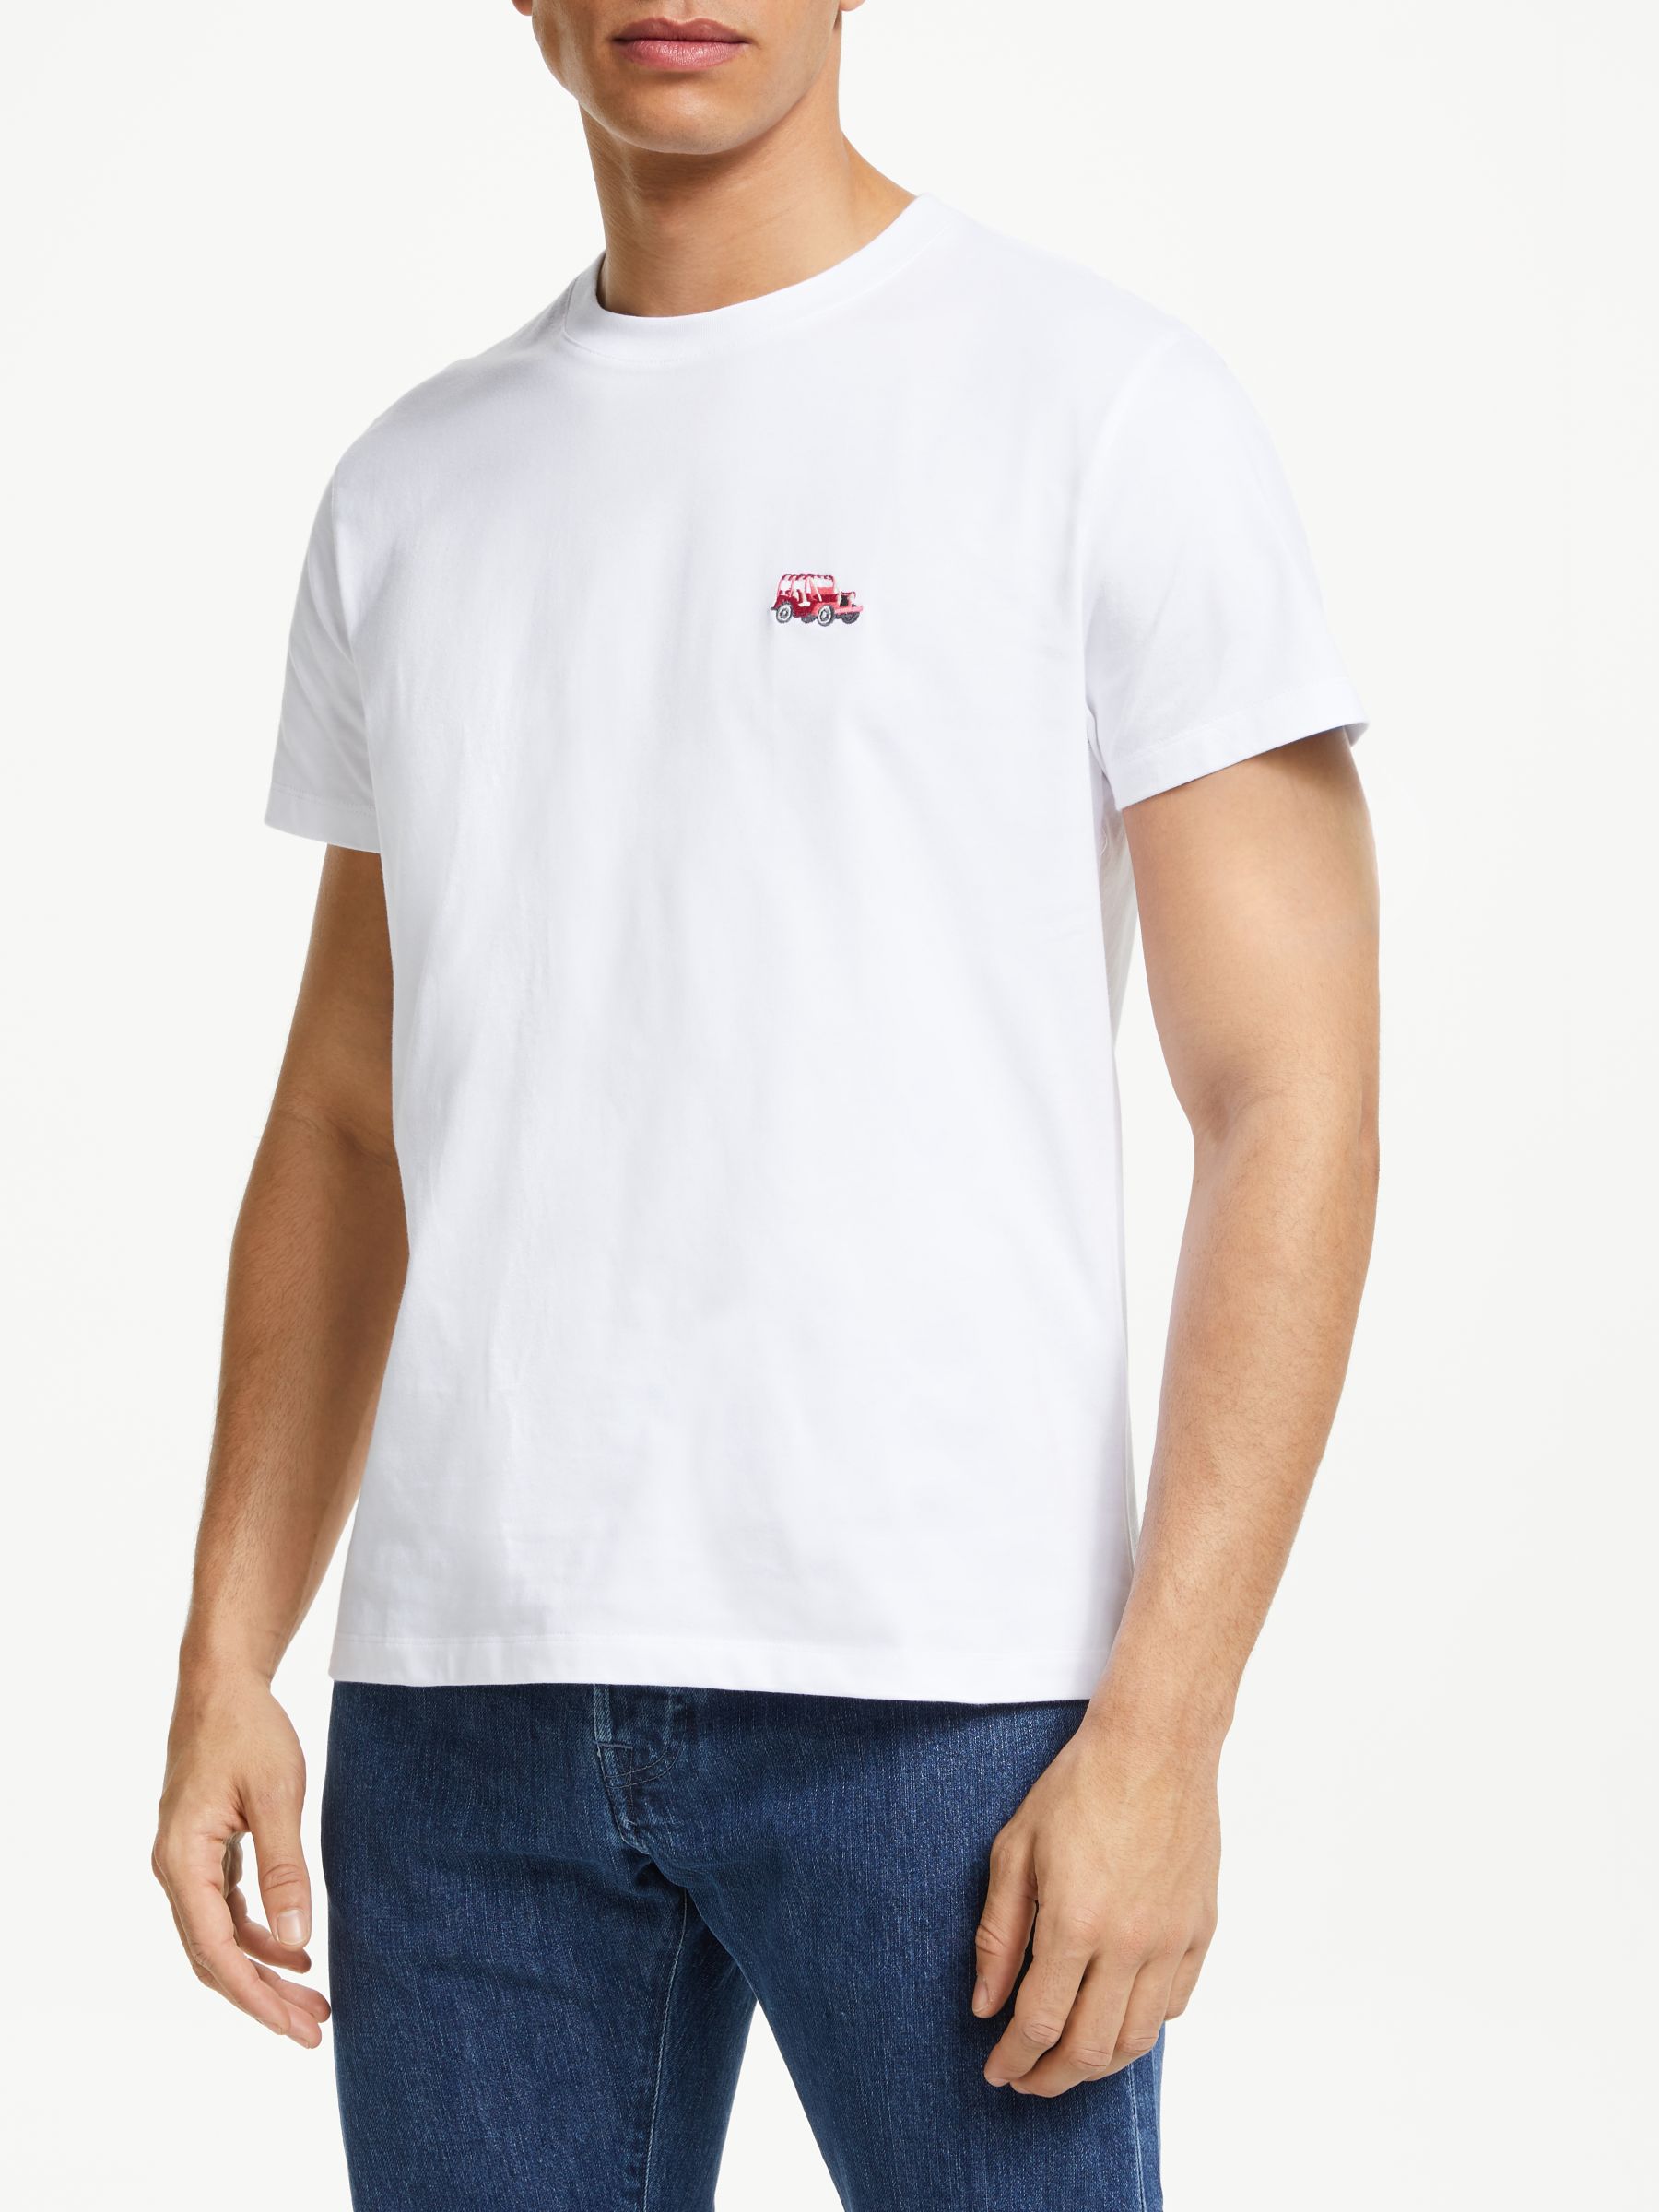 Maison Labiche Beach Buggy Embroidered T-Shirt, White